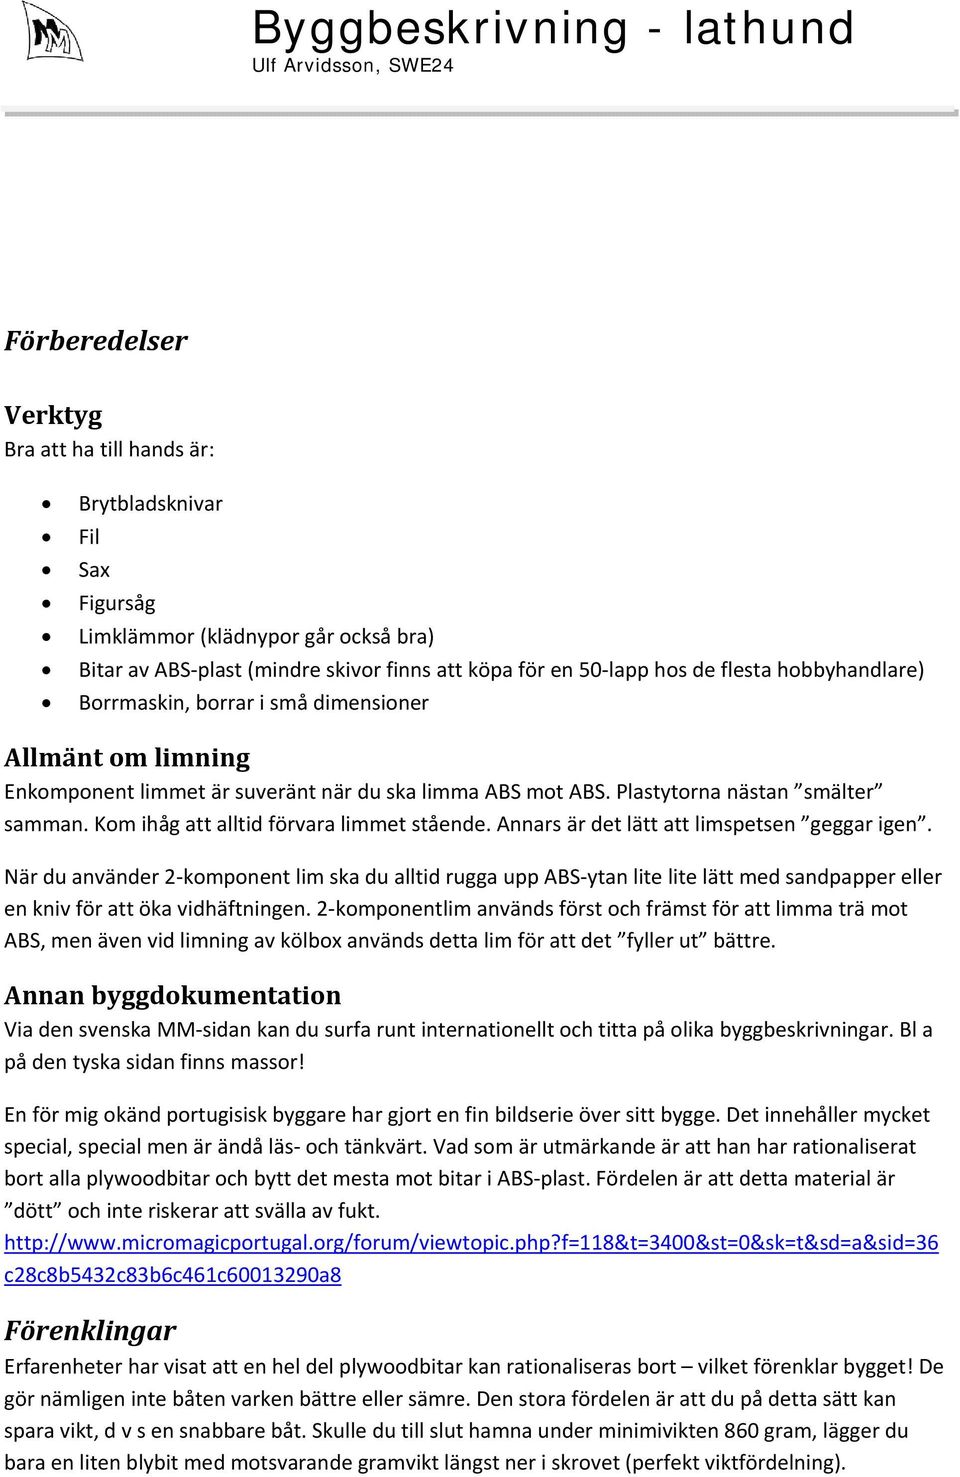 Byggbeskrivning - lathund Ulf Arvidsson, SWE24 - PDF Free Download